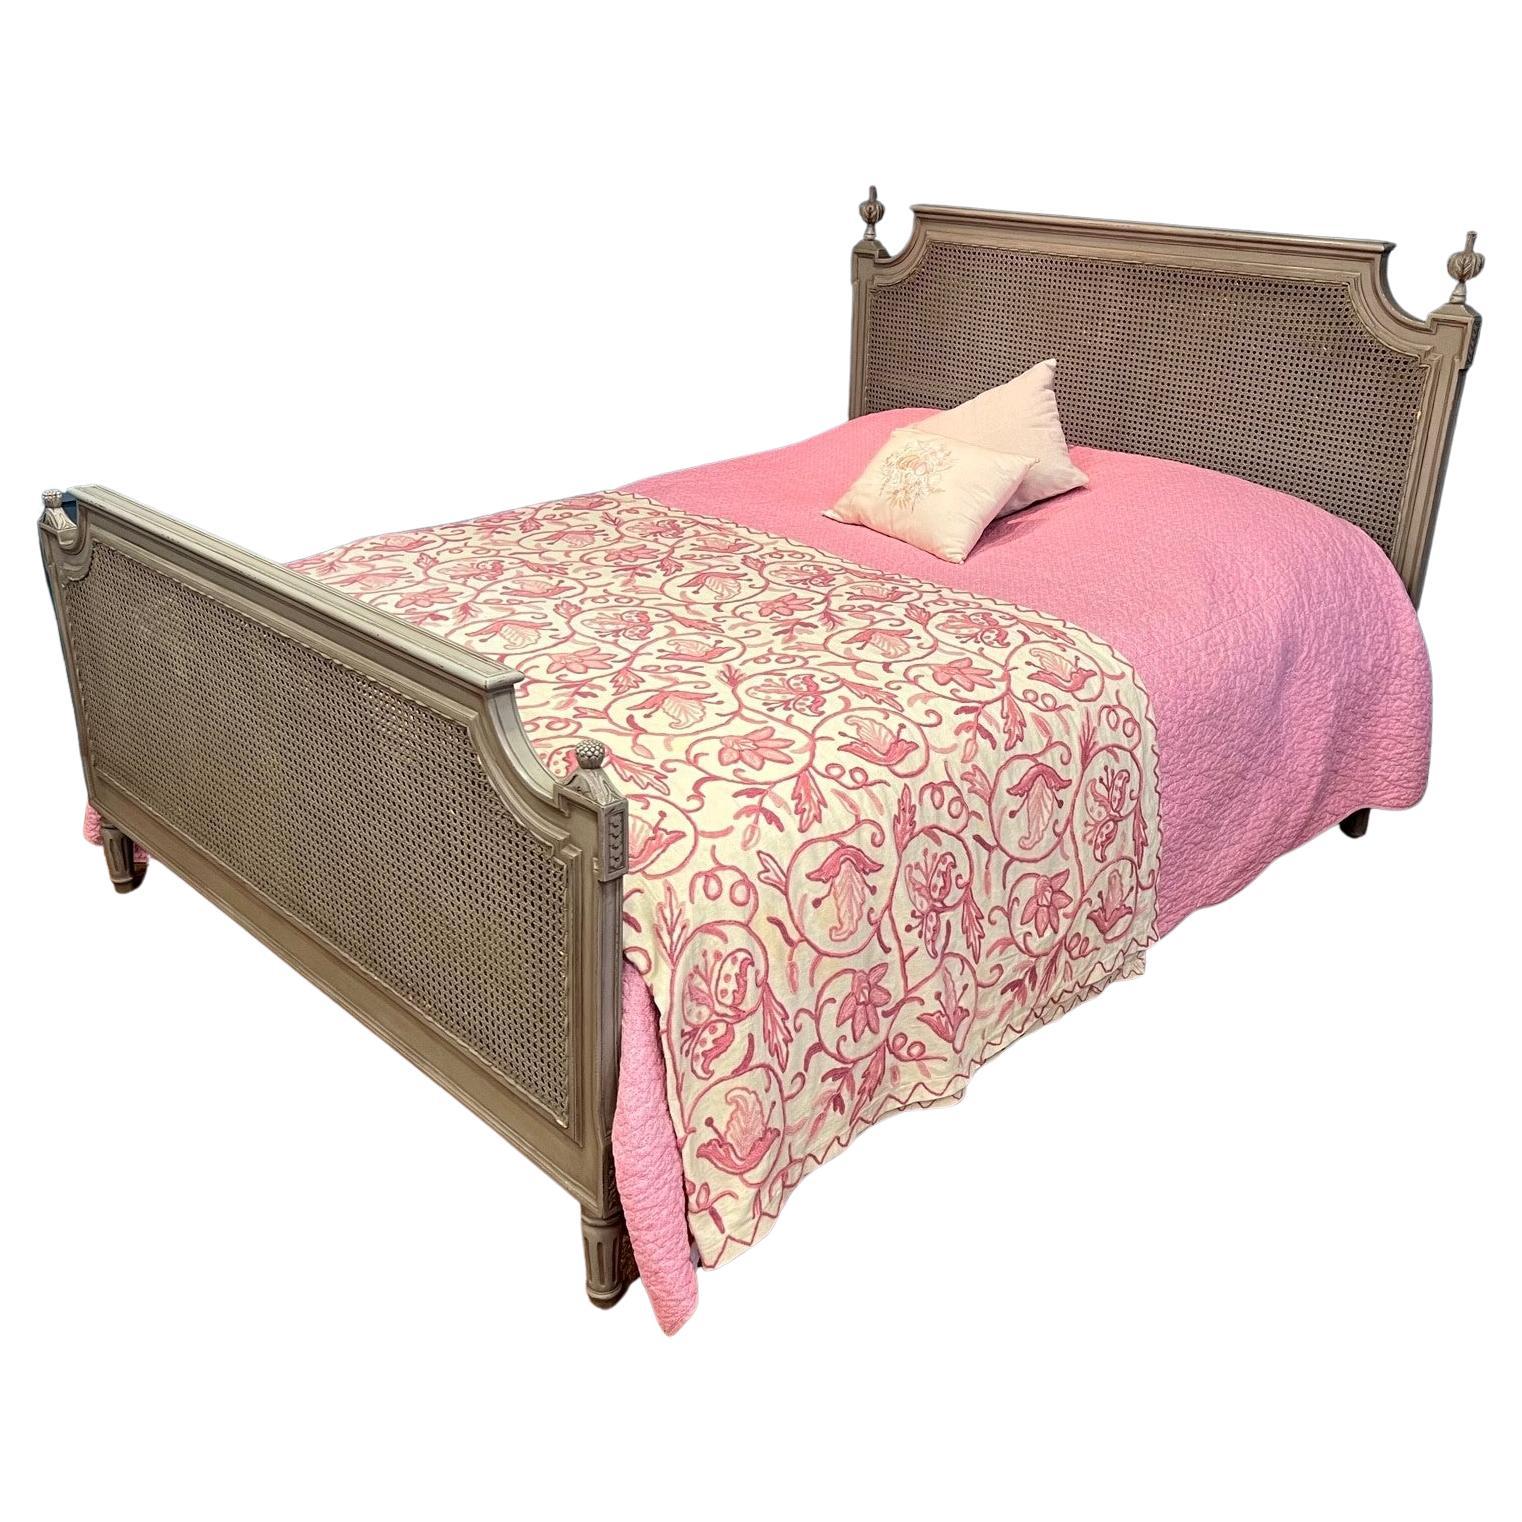 Kingsize, Vintage Caned Bed from France For Sale